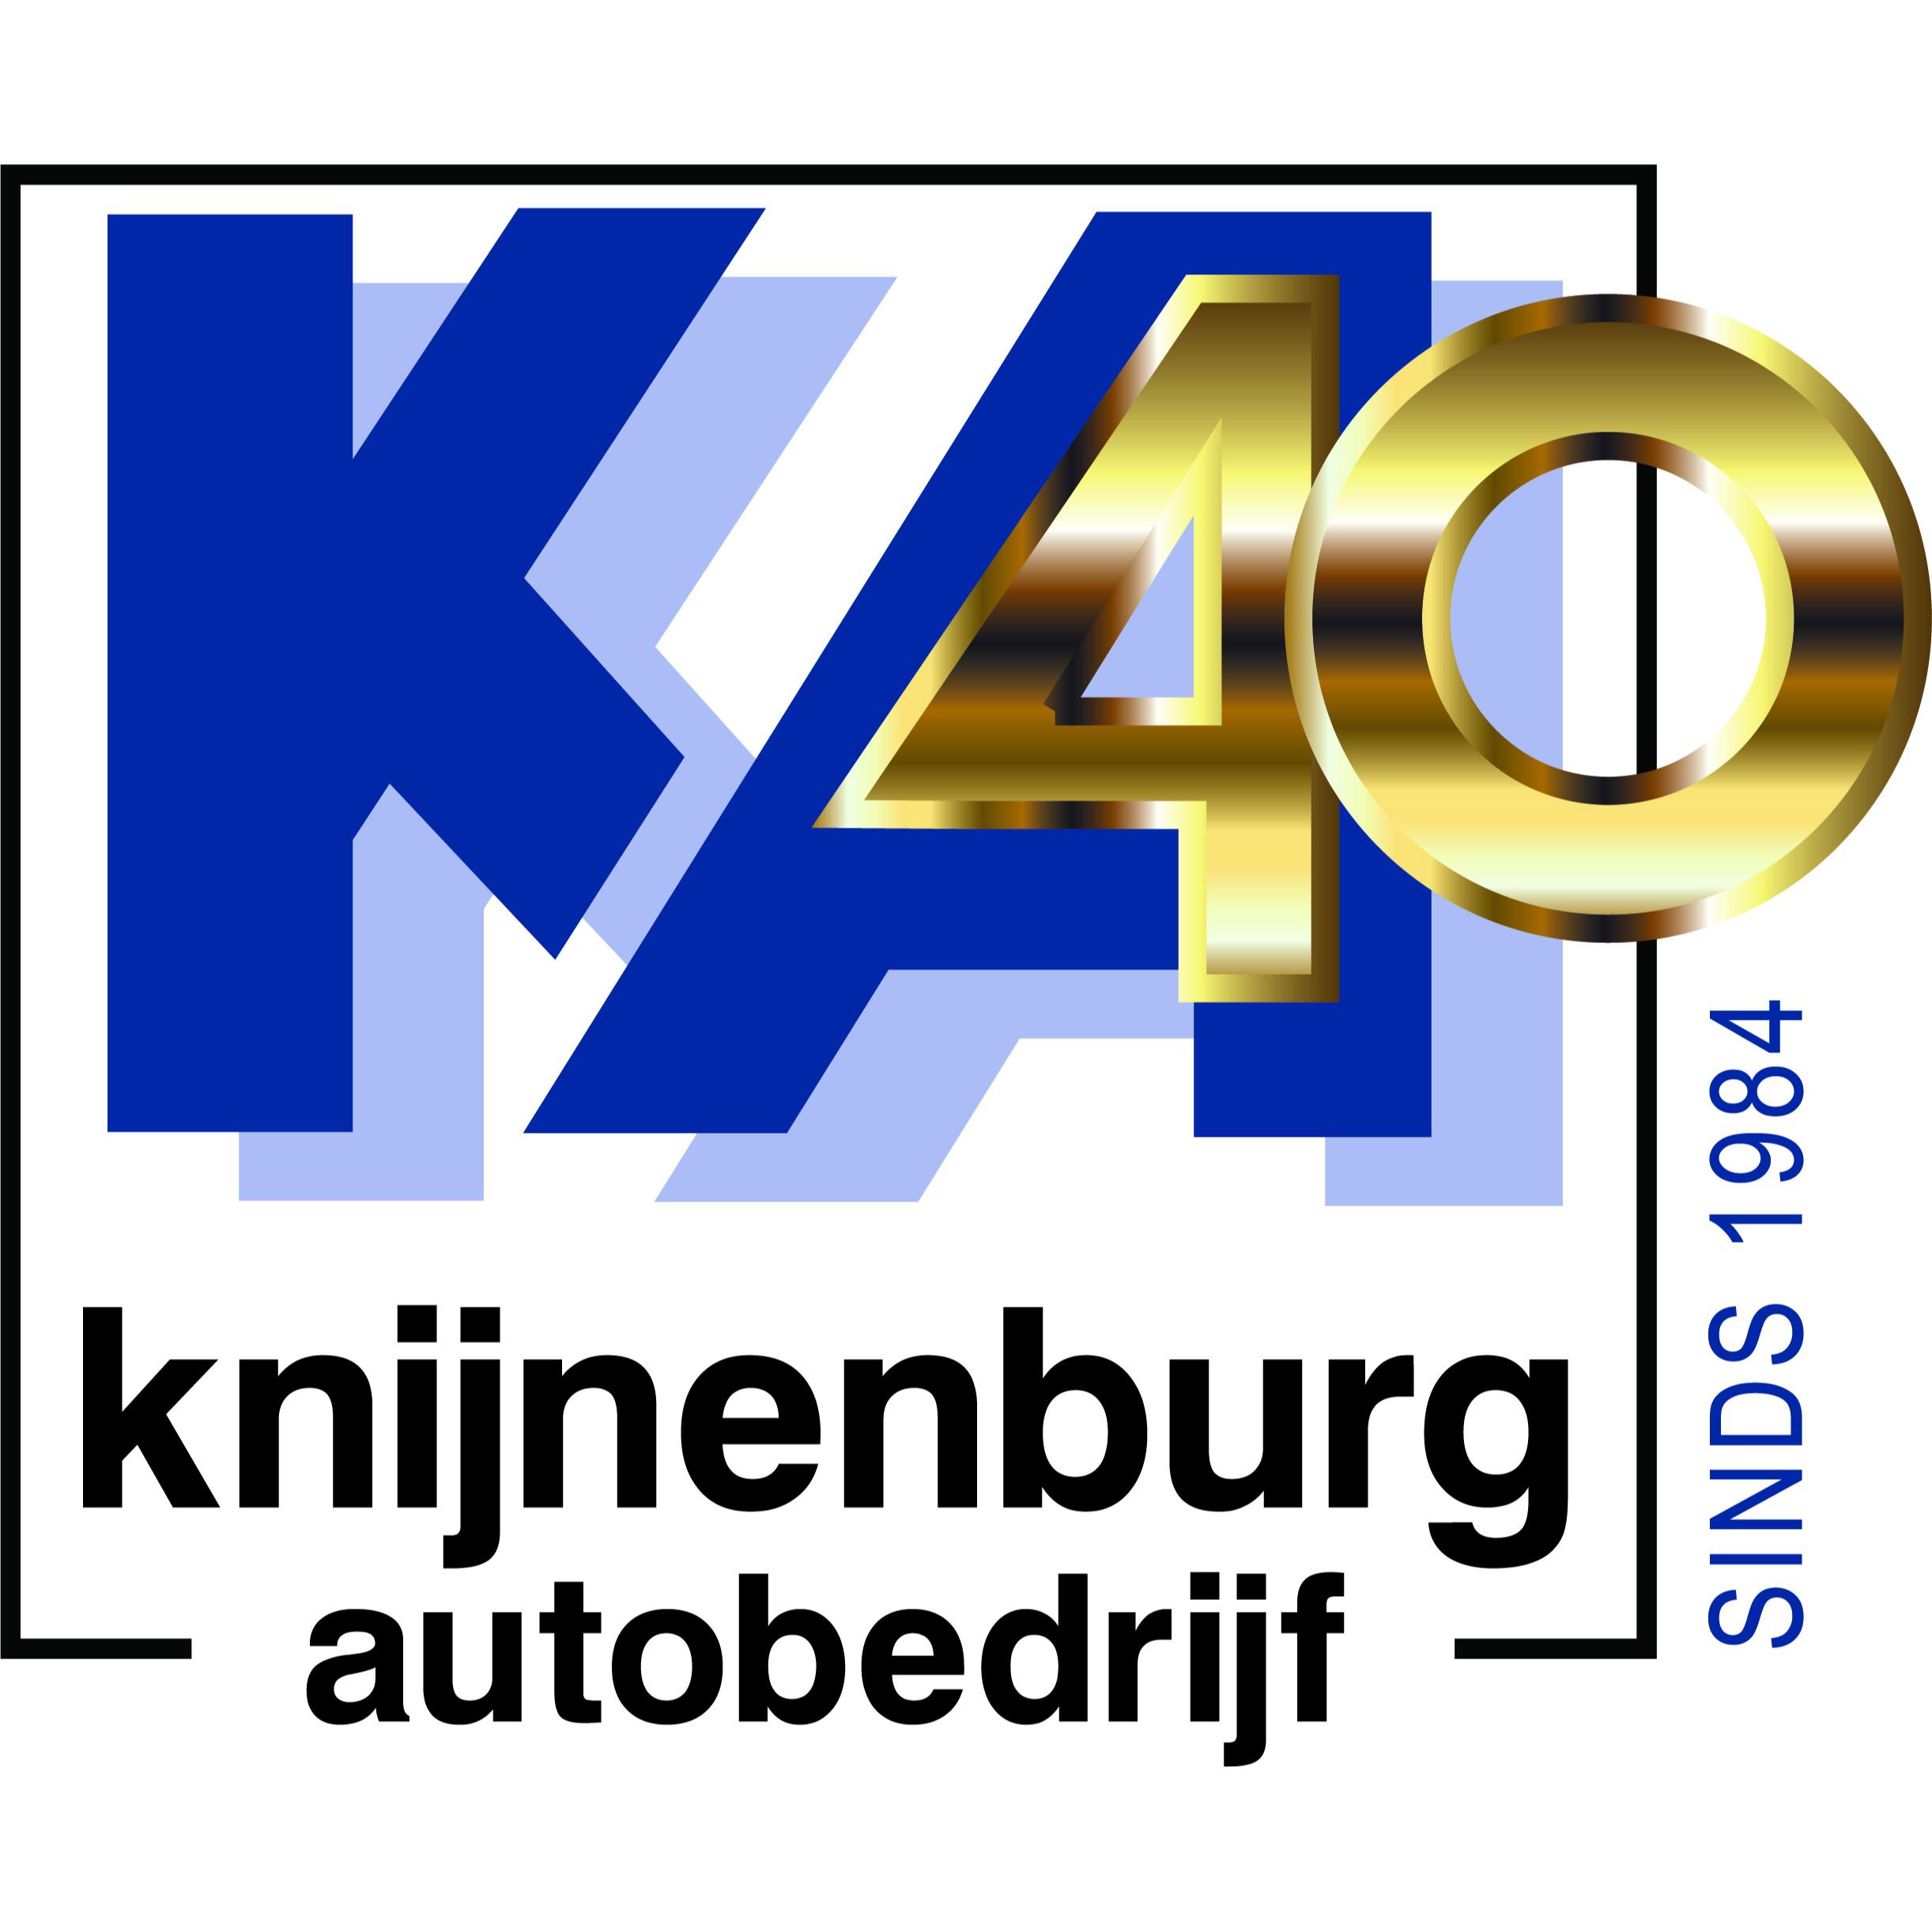 Knijnenburg Autobedrijf Logo